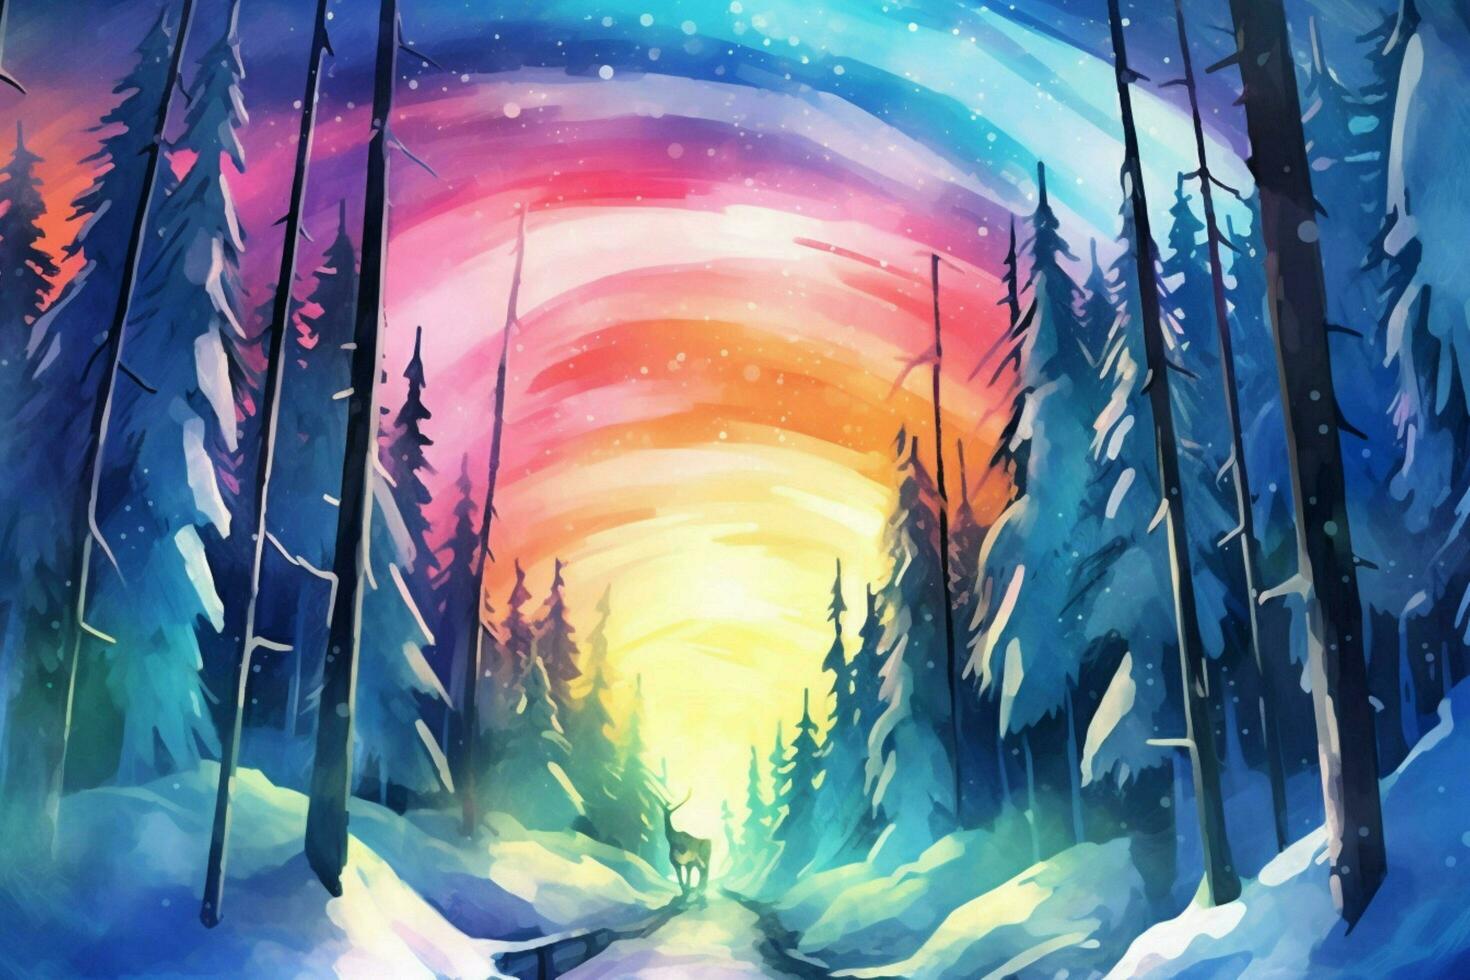 the illustration depicts a nordic aurora borealis photo